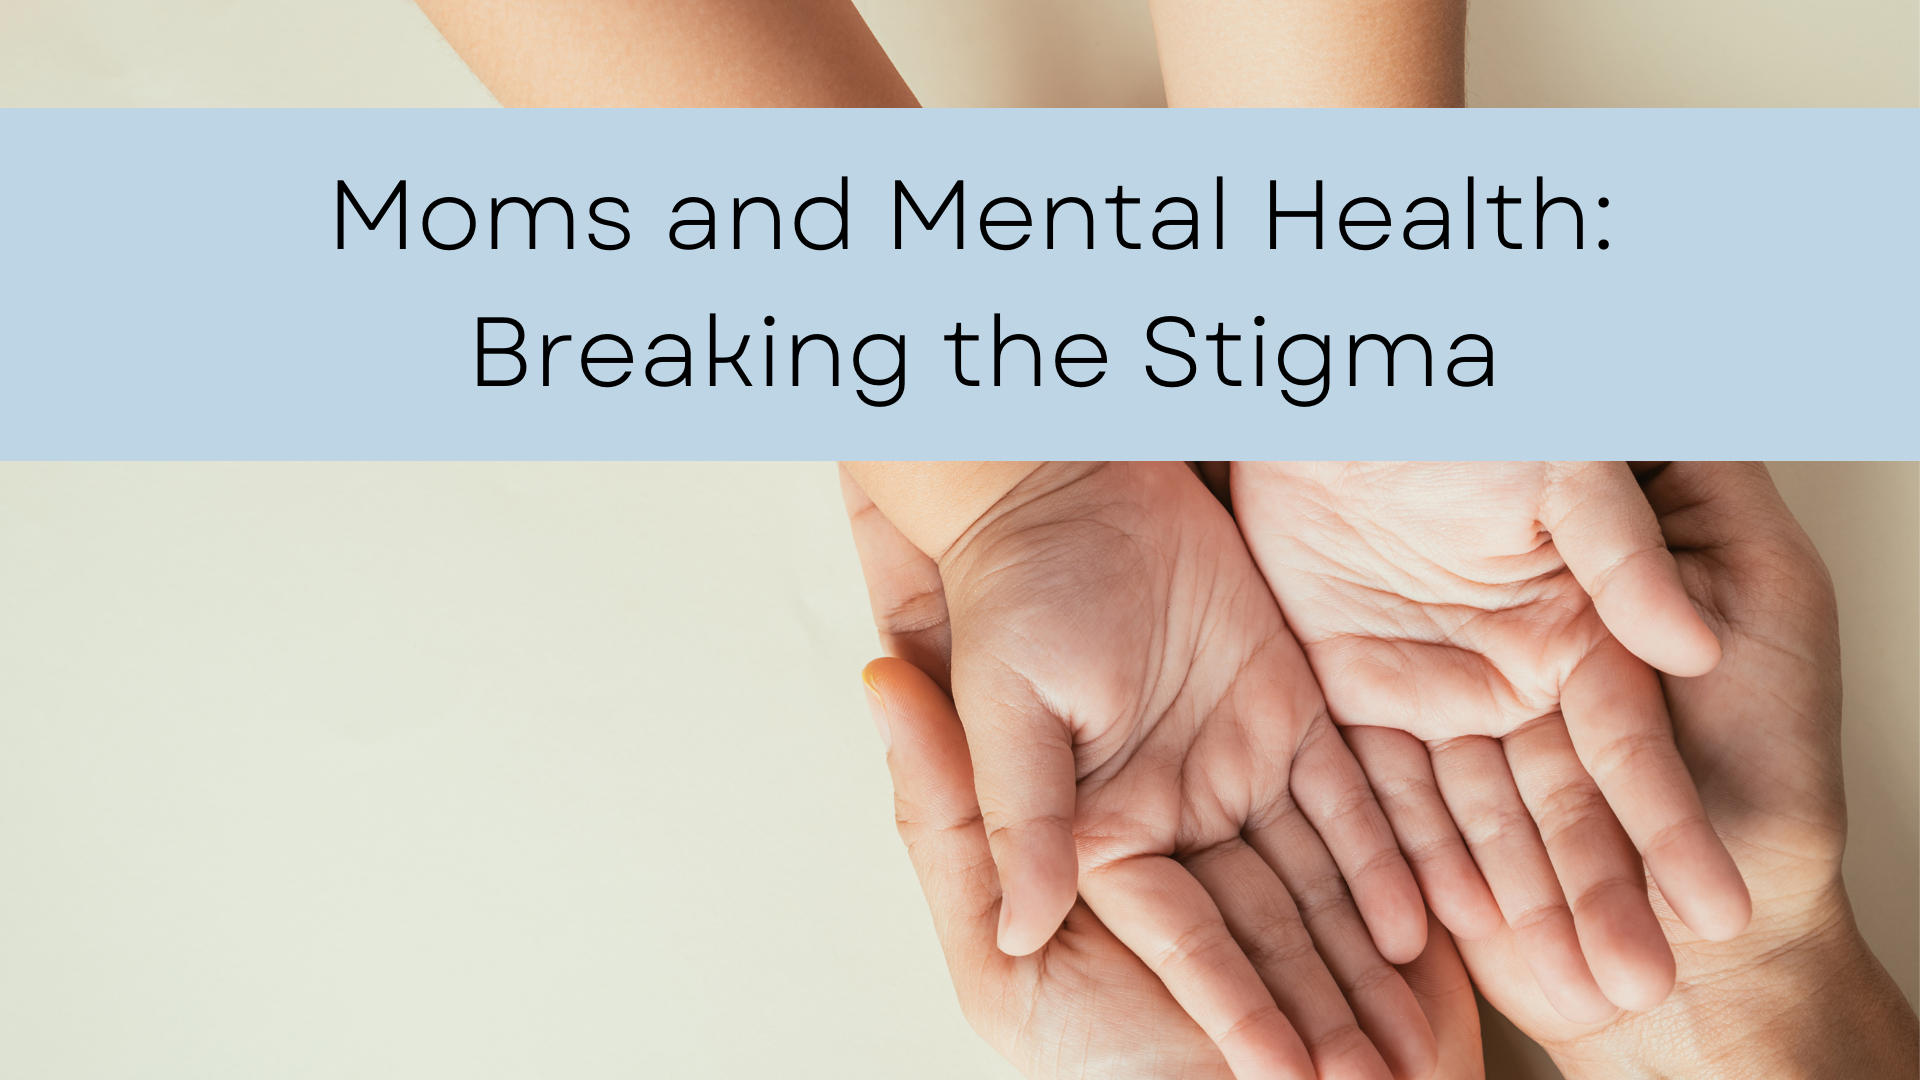 Moms and Mental Health: Breaking the Stigma